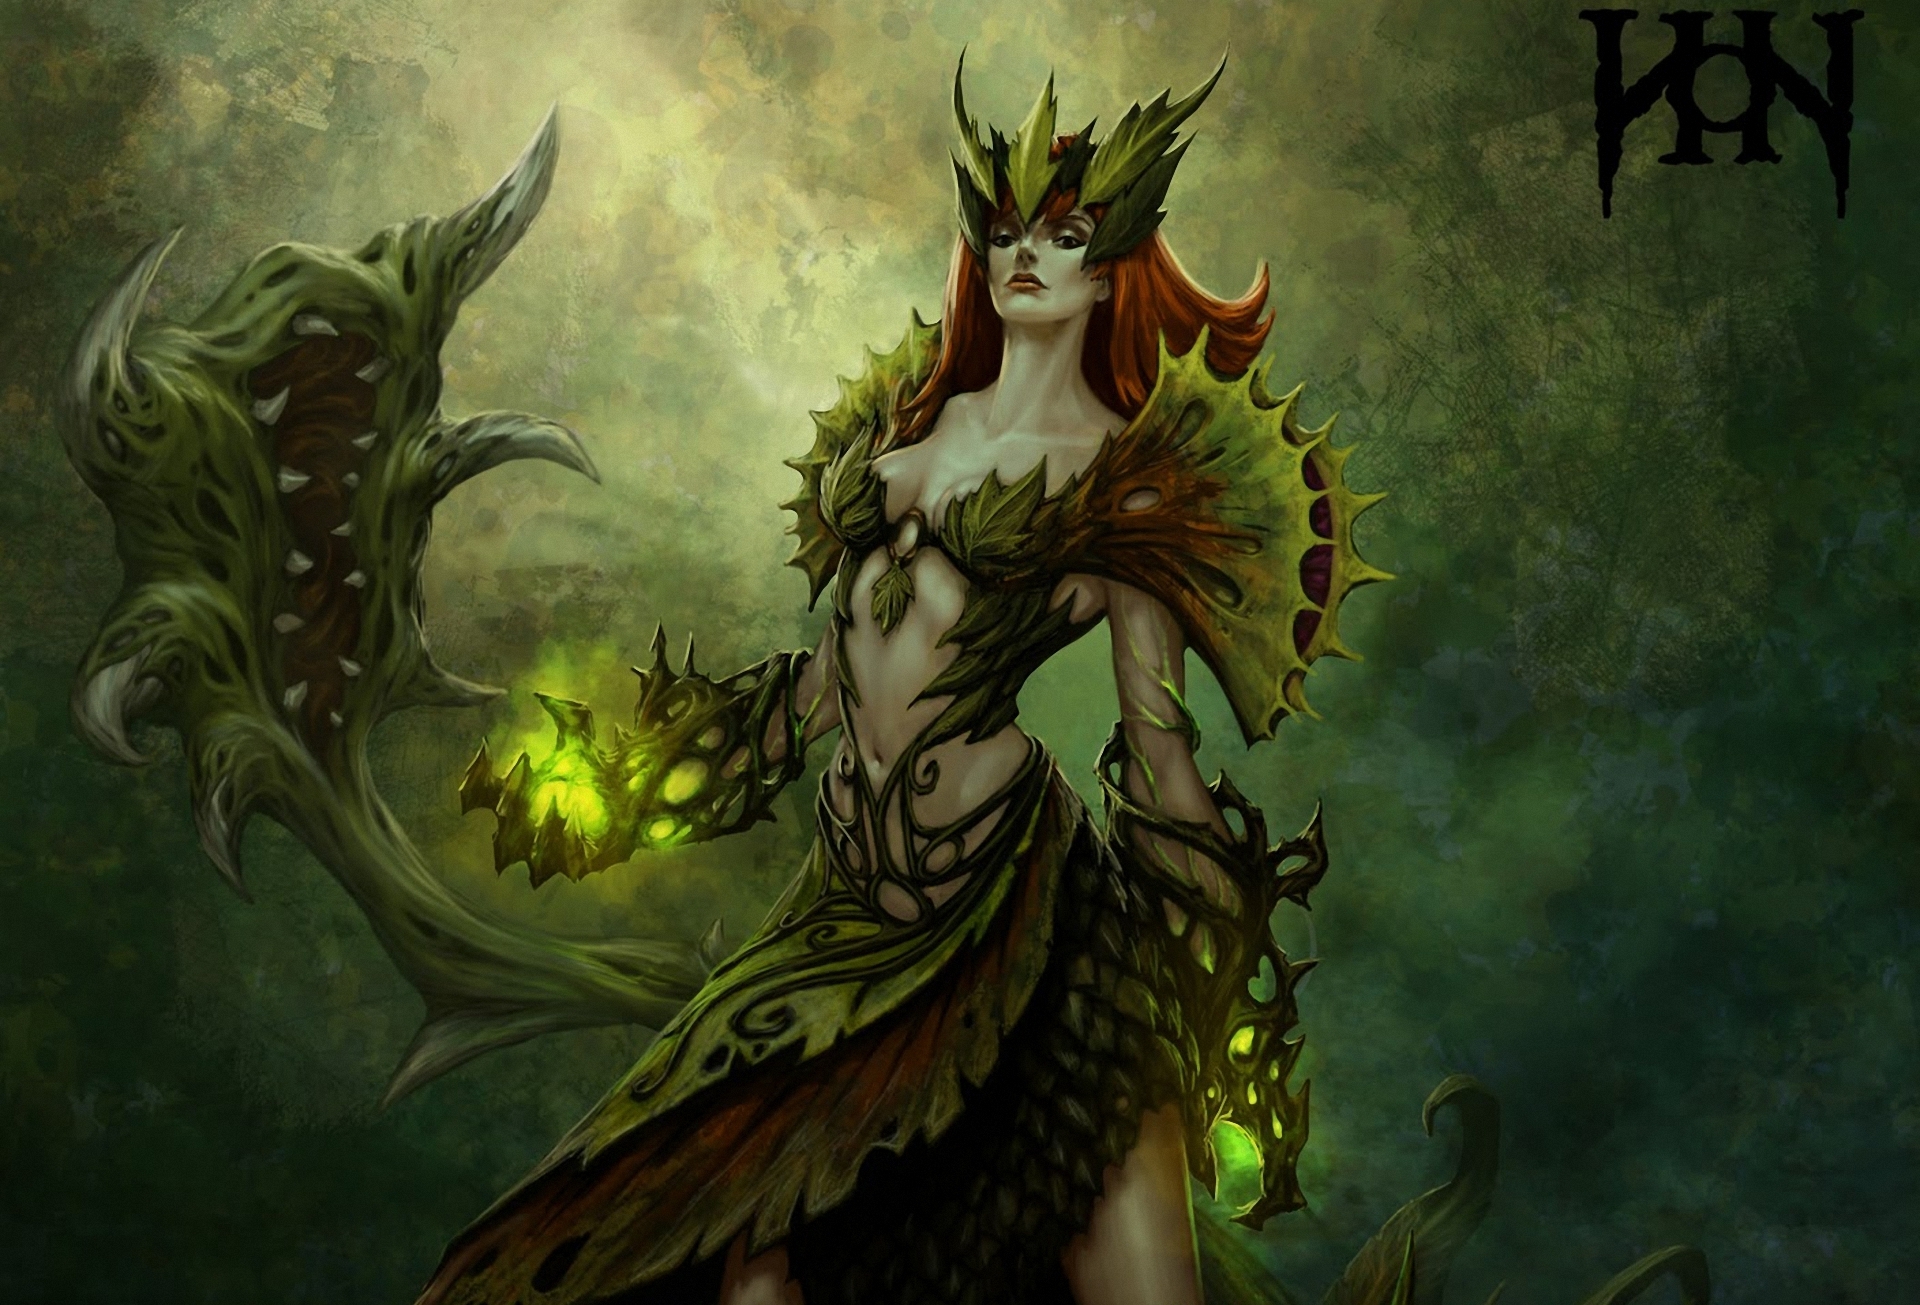 Legends Zyra Girl Plants Weapons Magic Fangs Monster Wallpaper